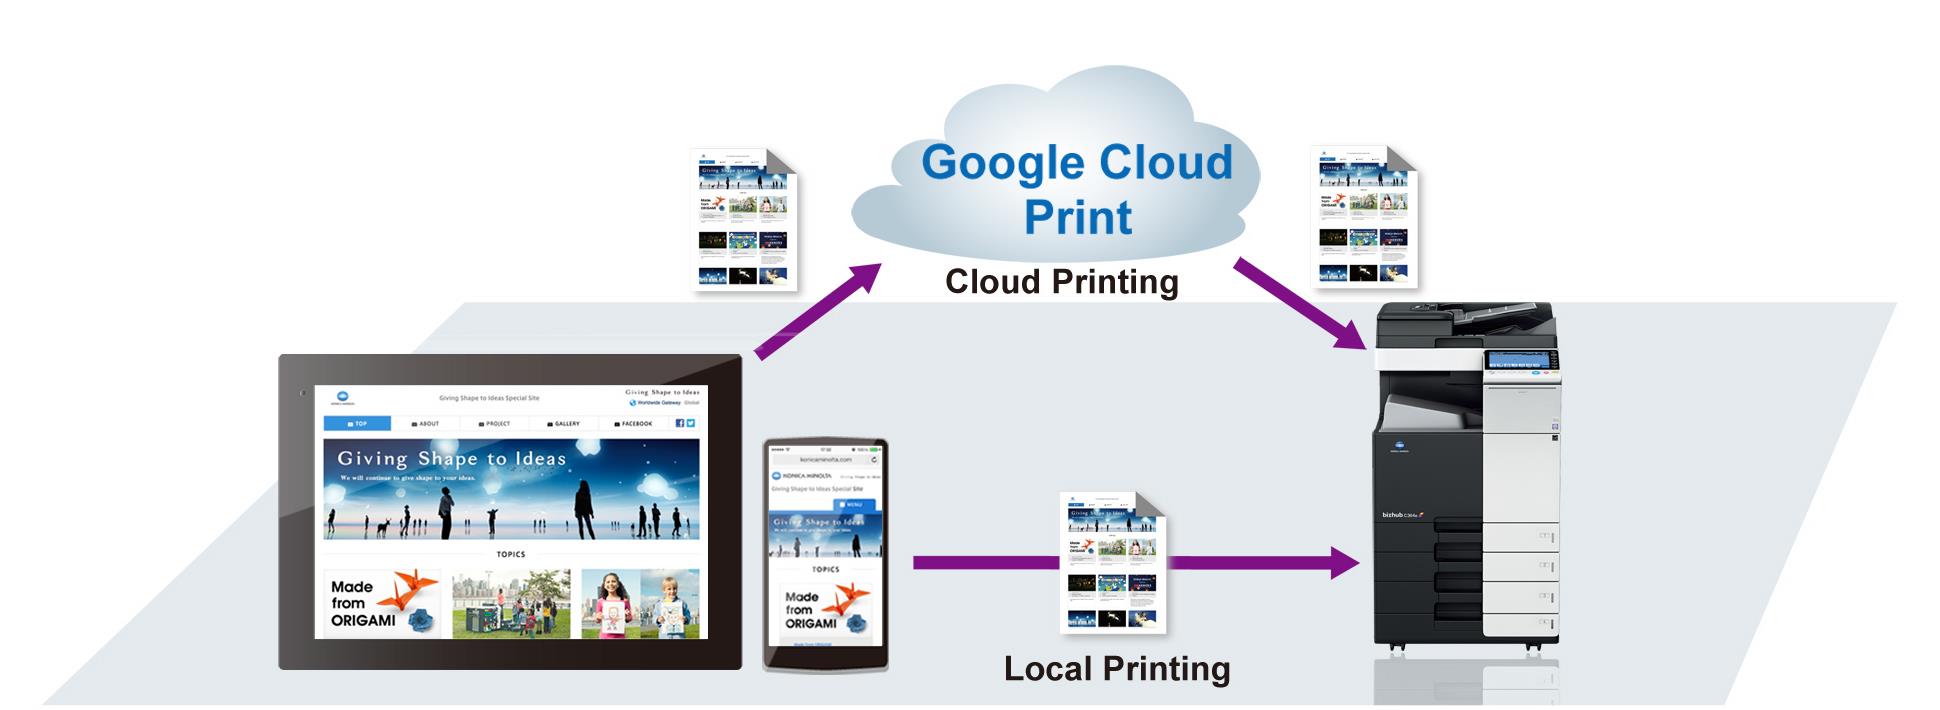 fjende sofa Awaken Google Cloud Print – Office Automation Group